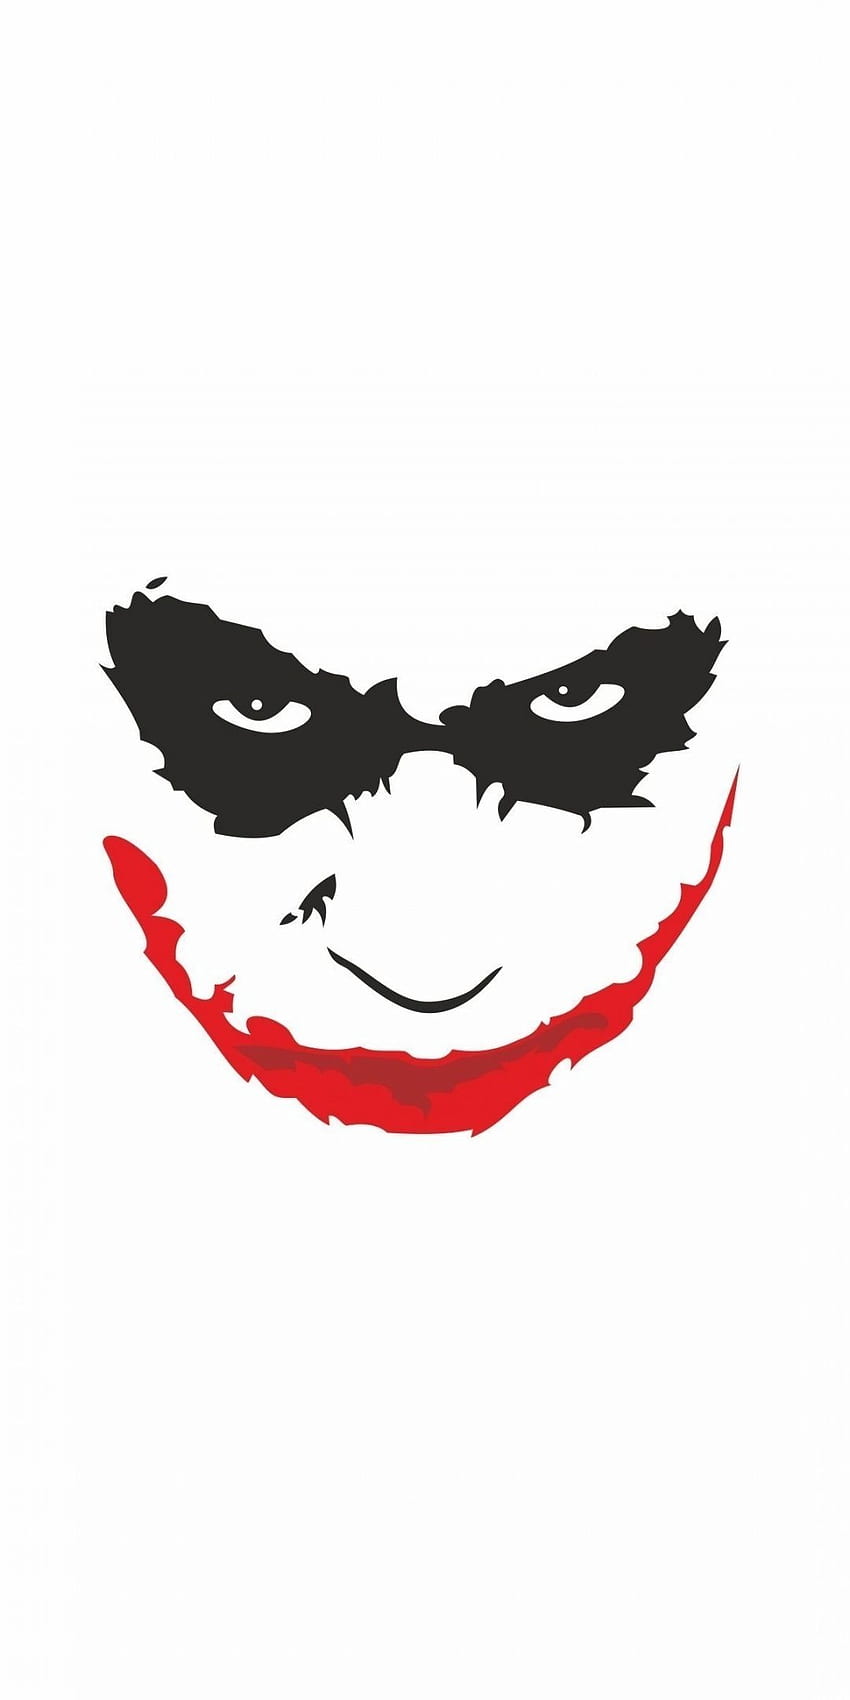 Joker drawing by Stephen Ward | No. 3212